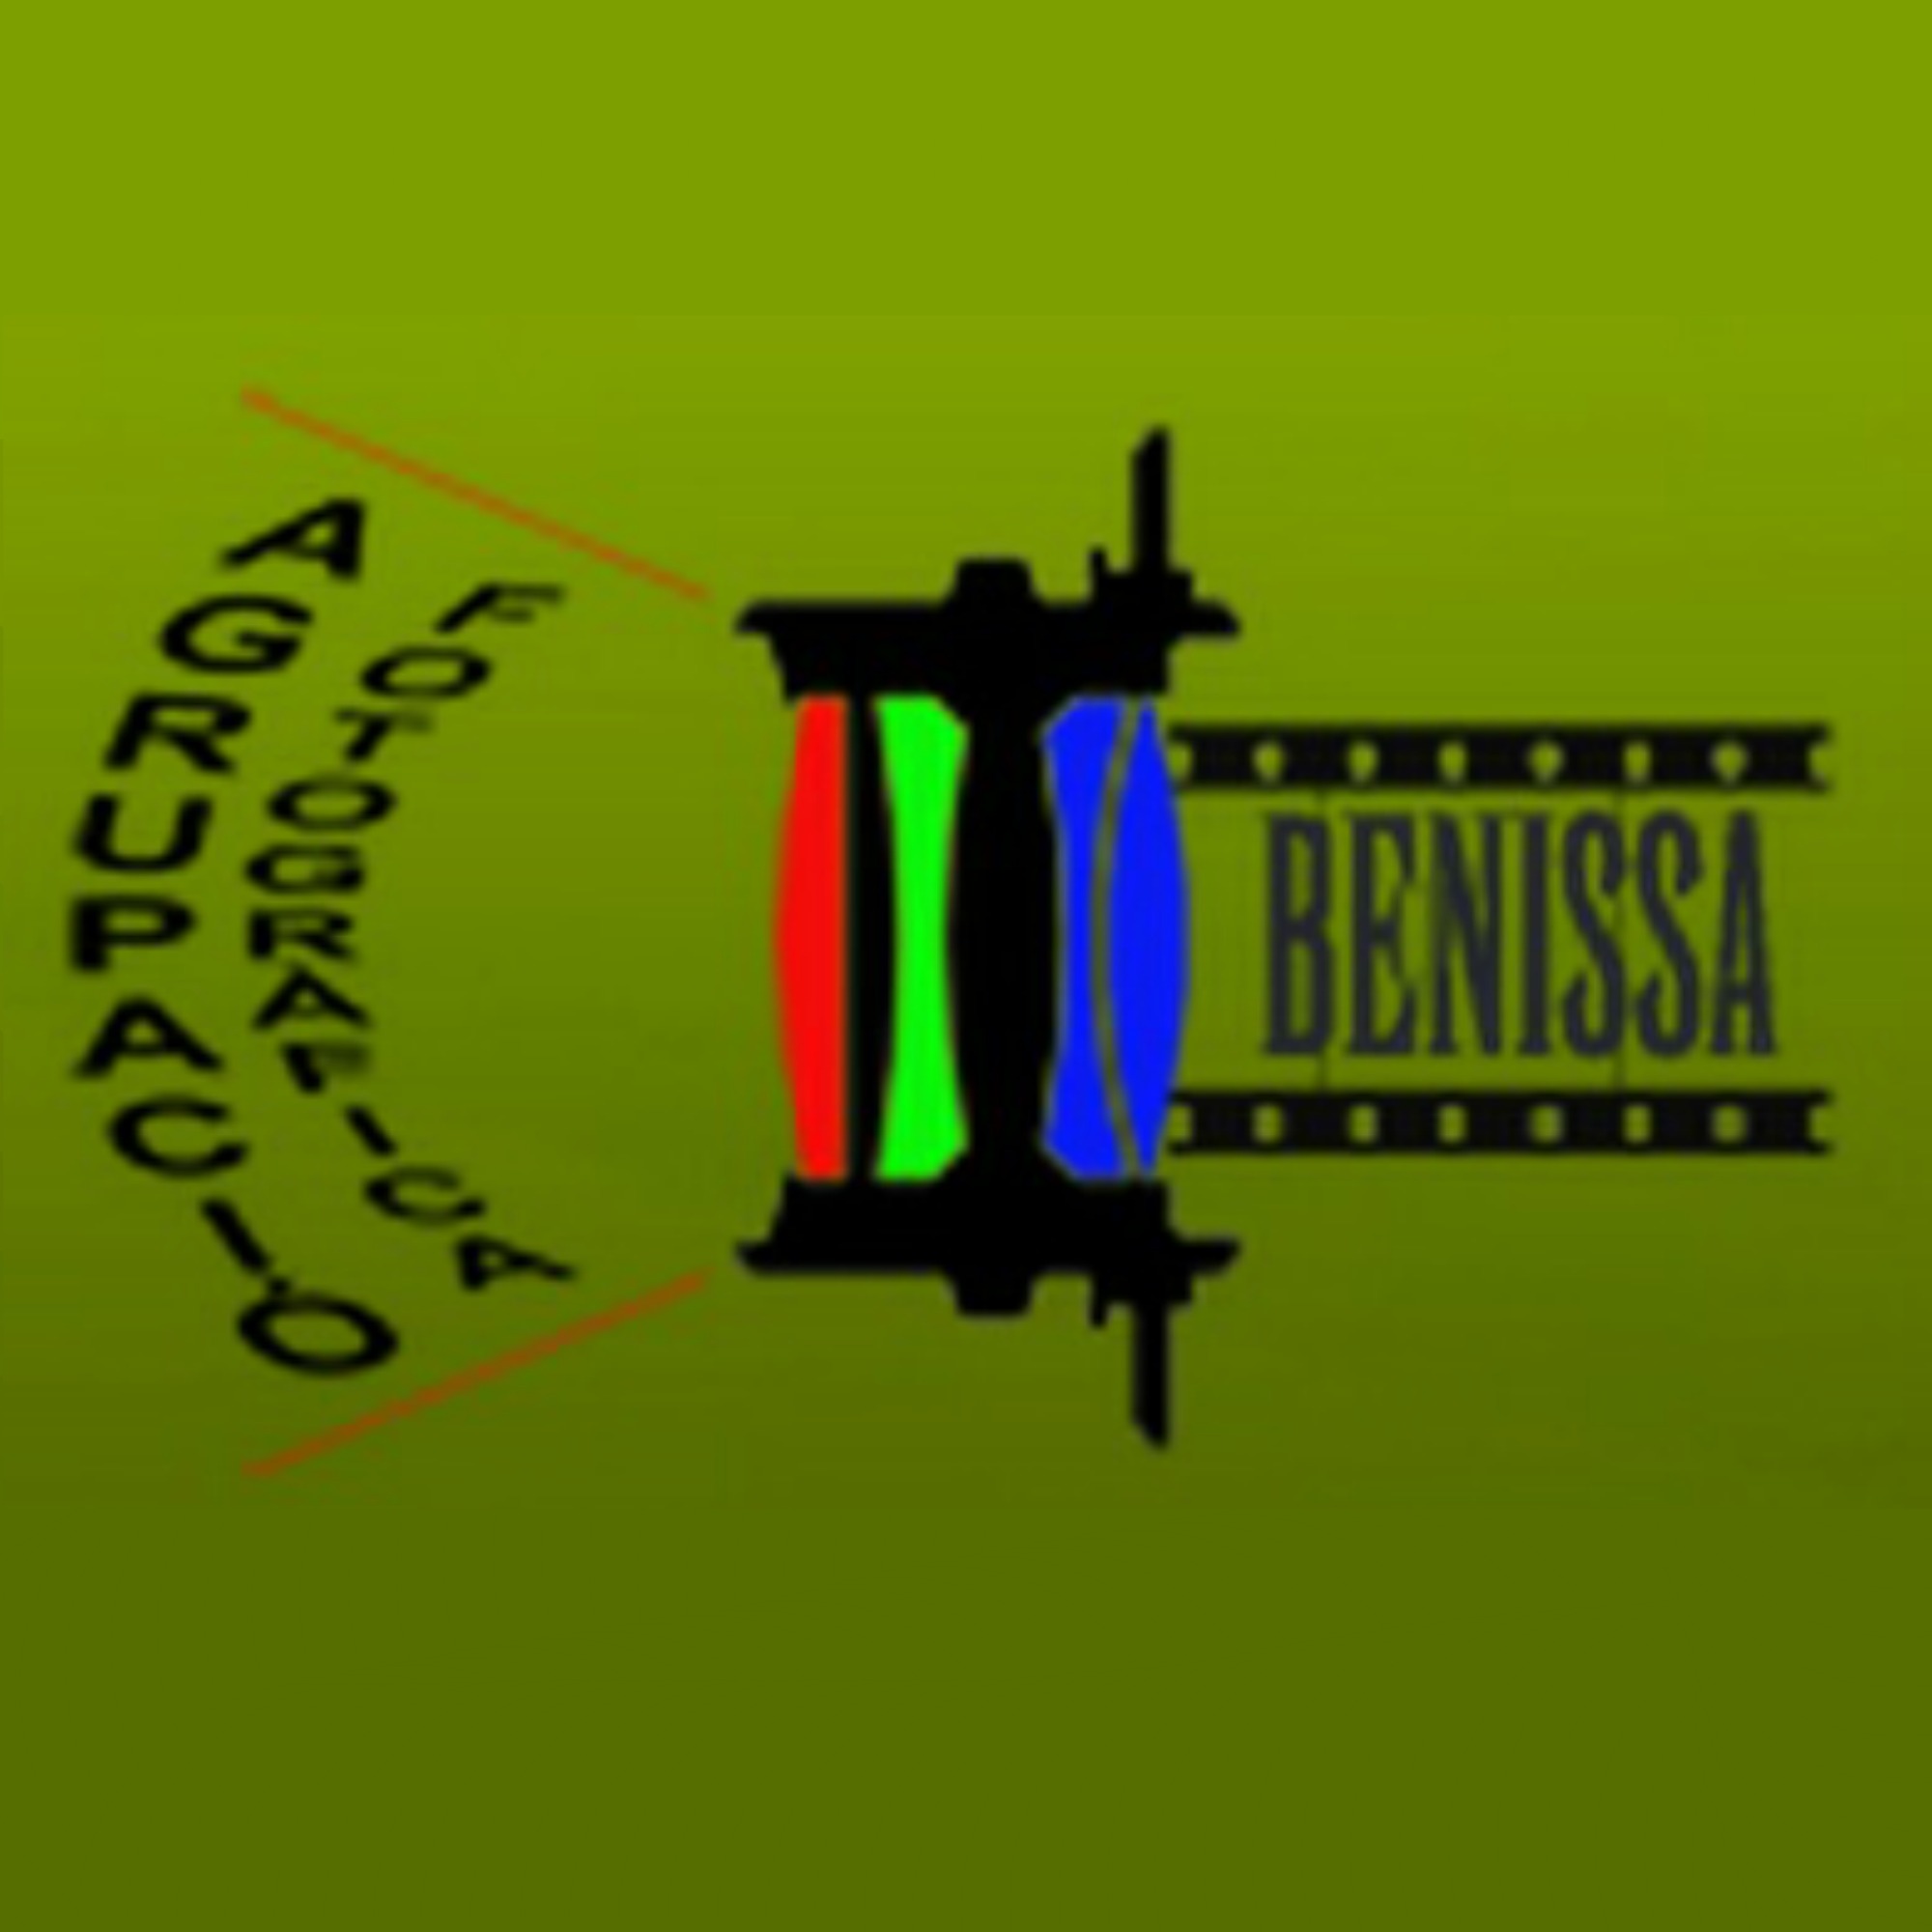 Fotografieverein Benissa